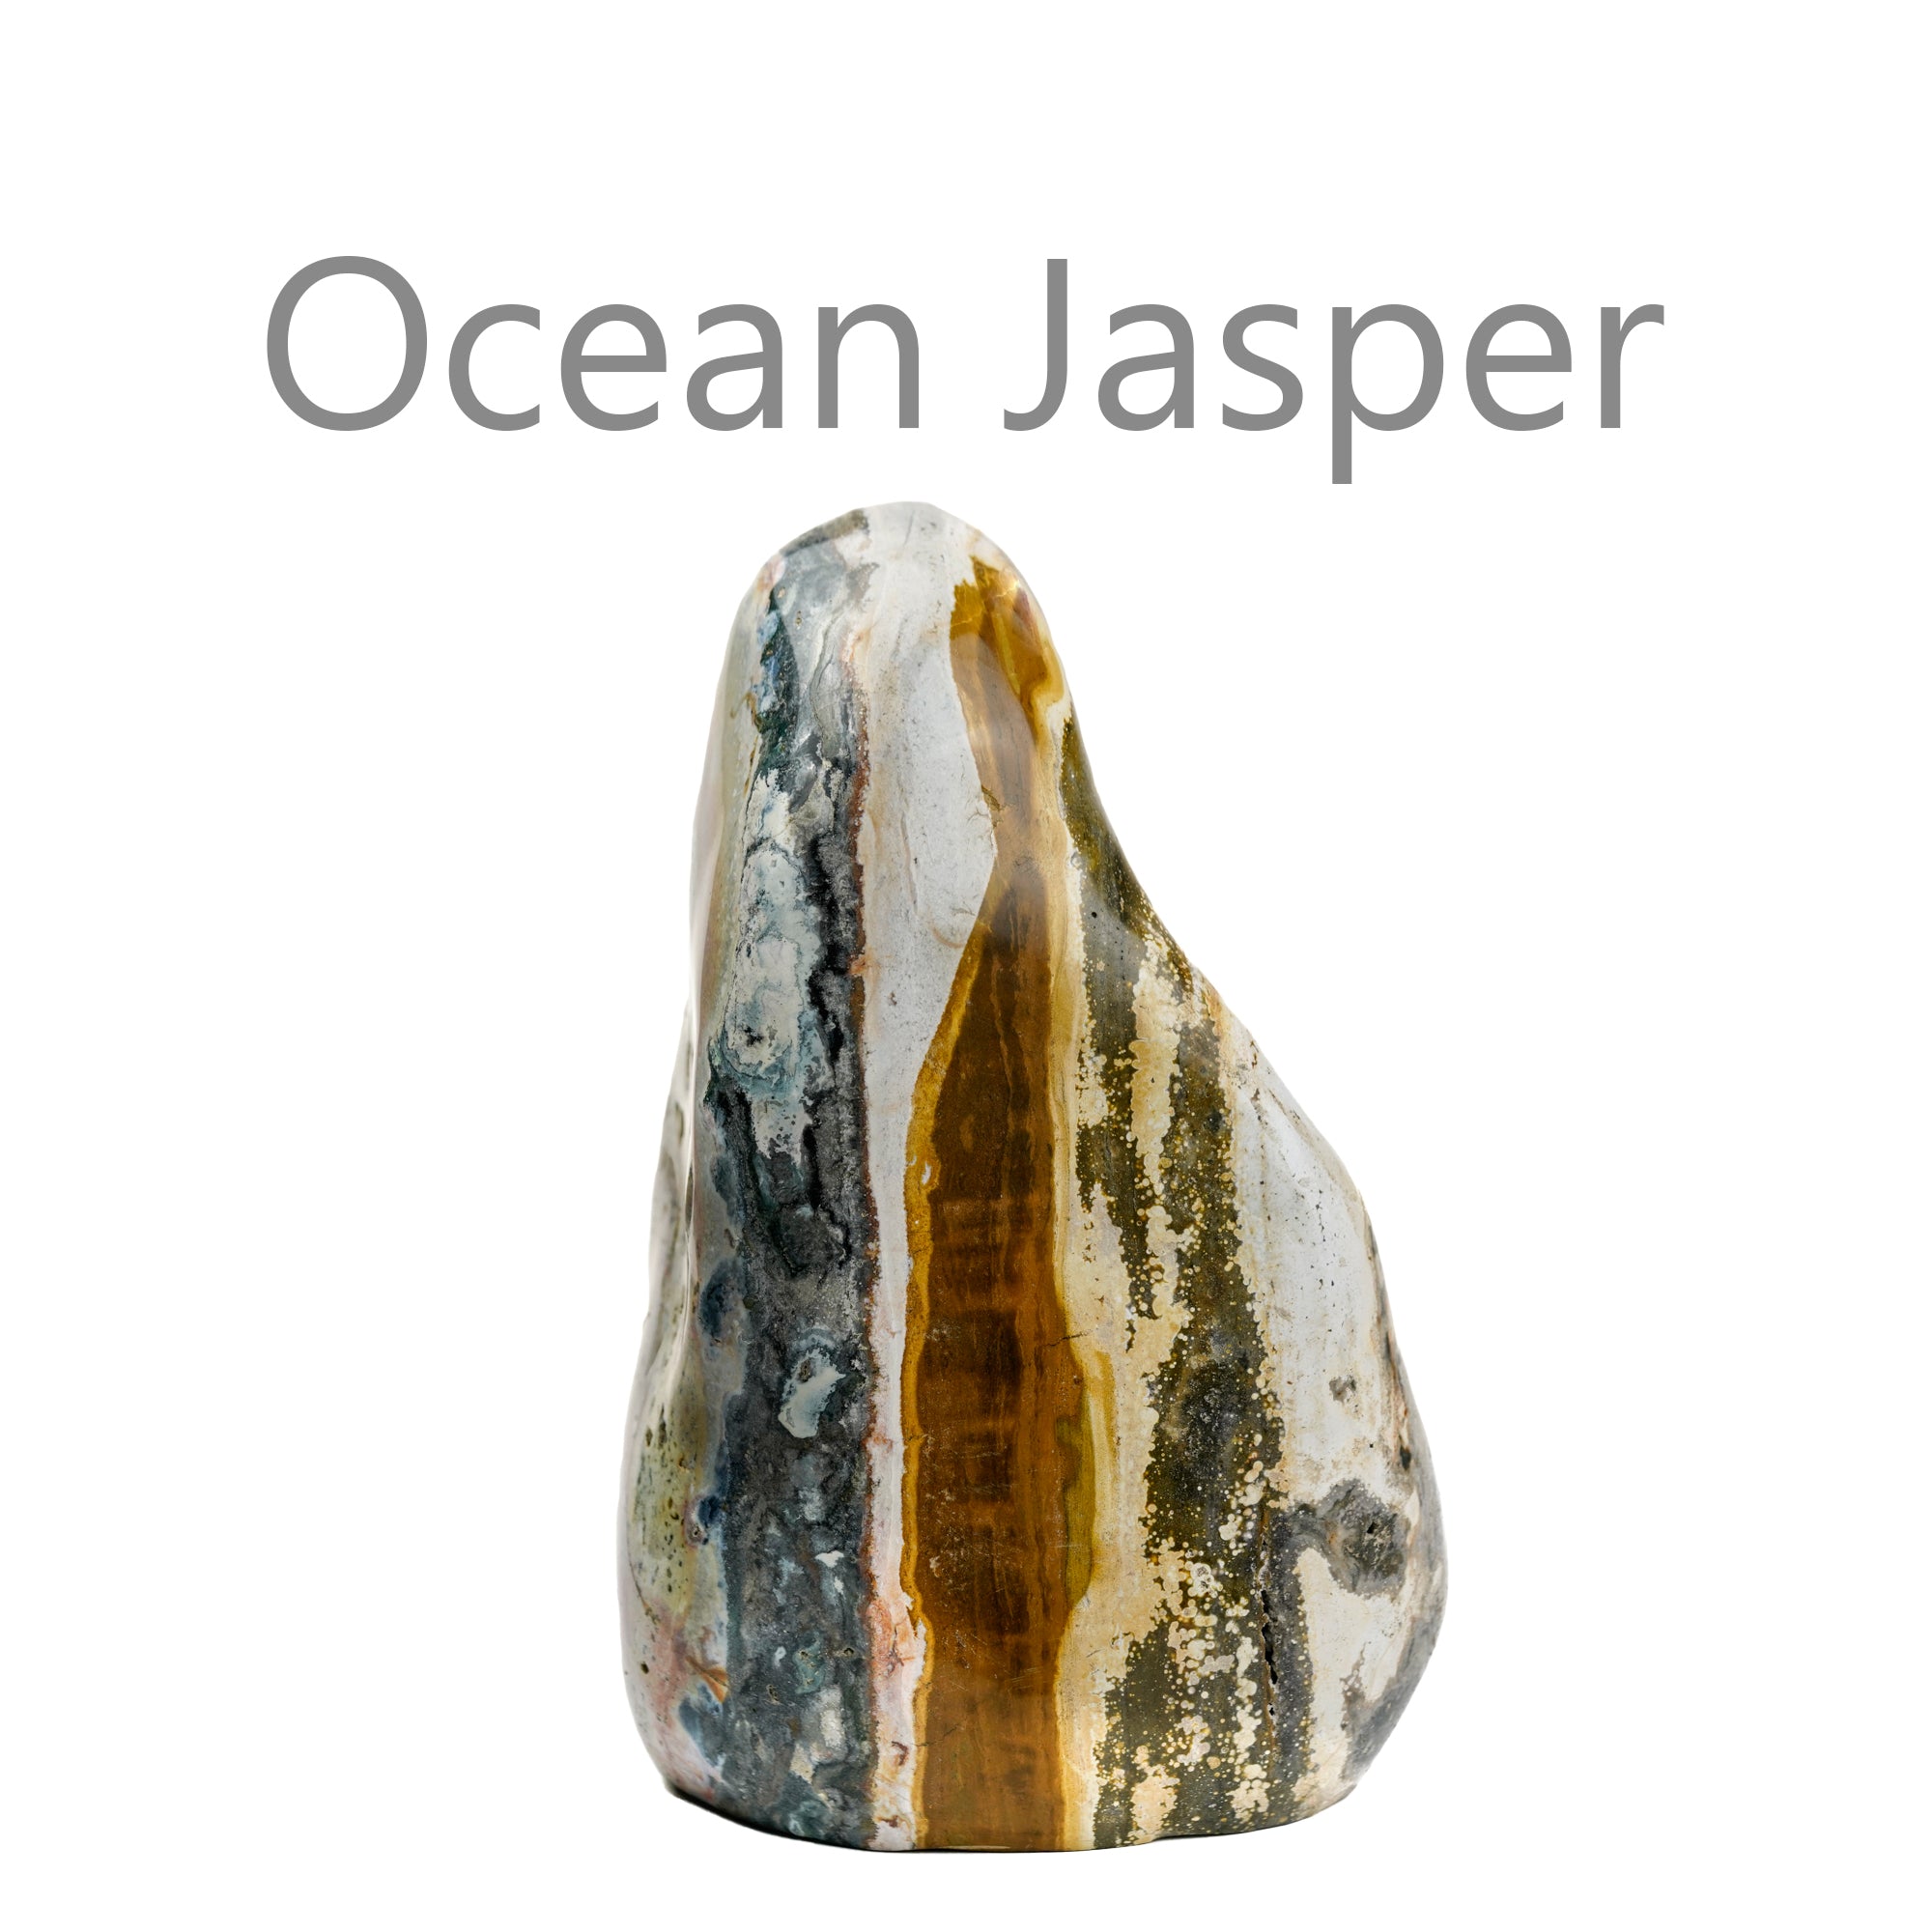 ocean jasper